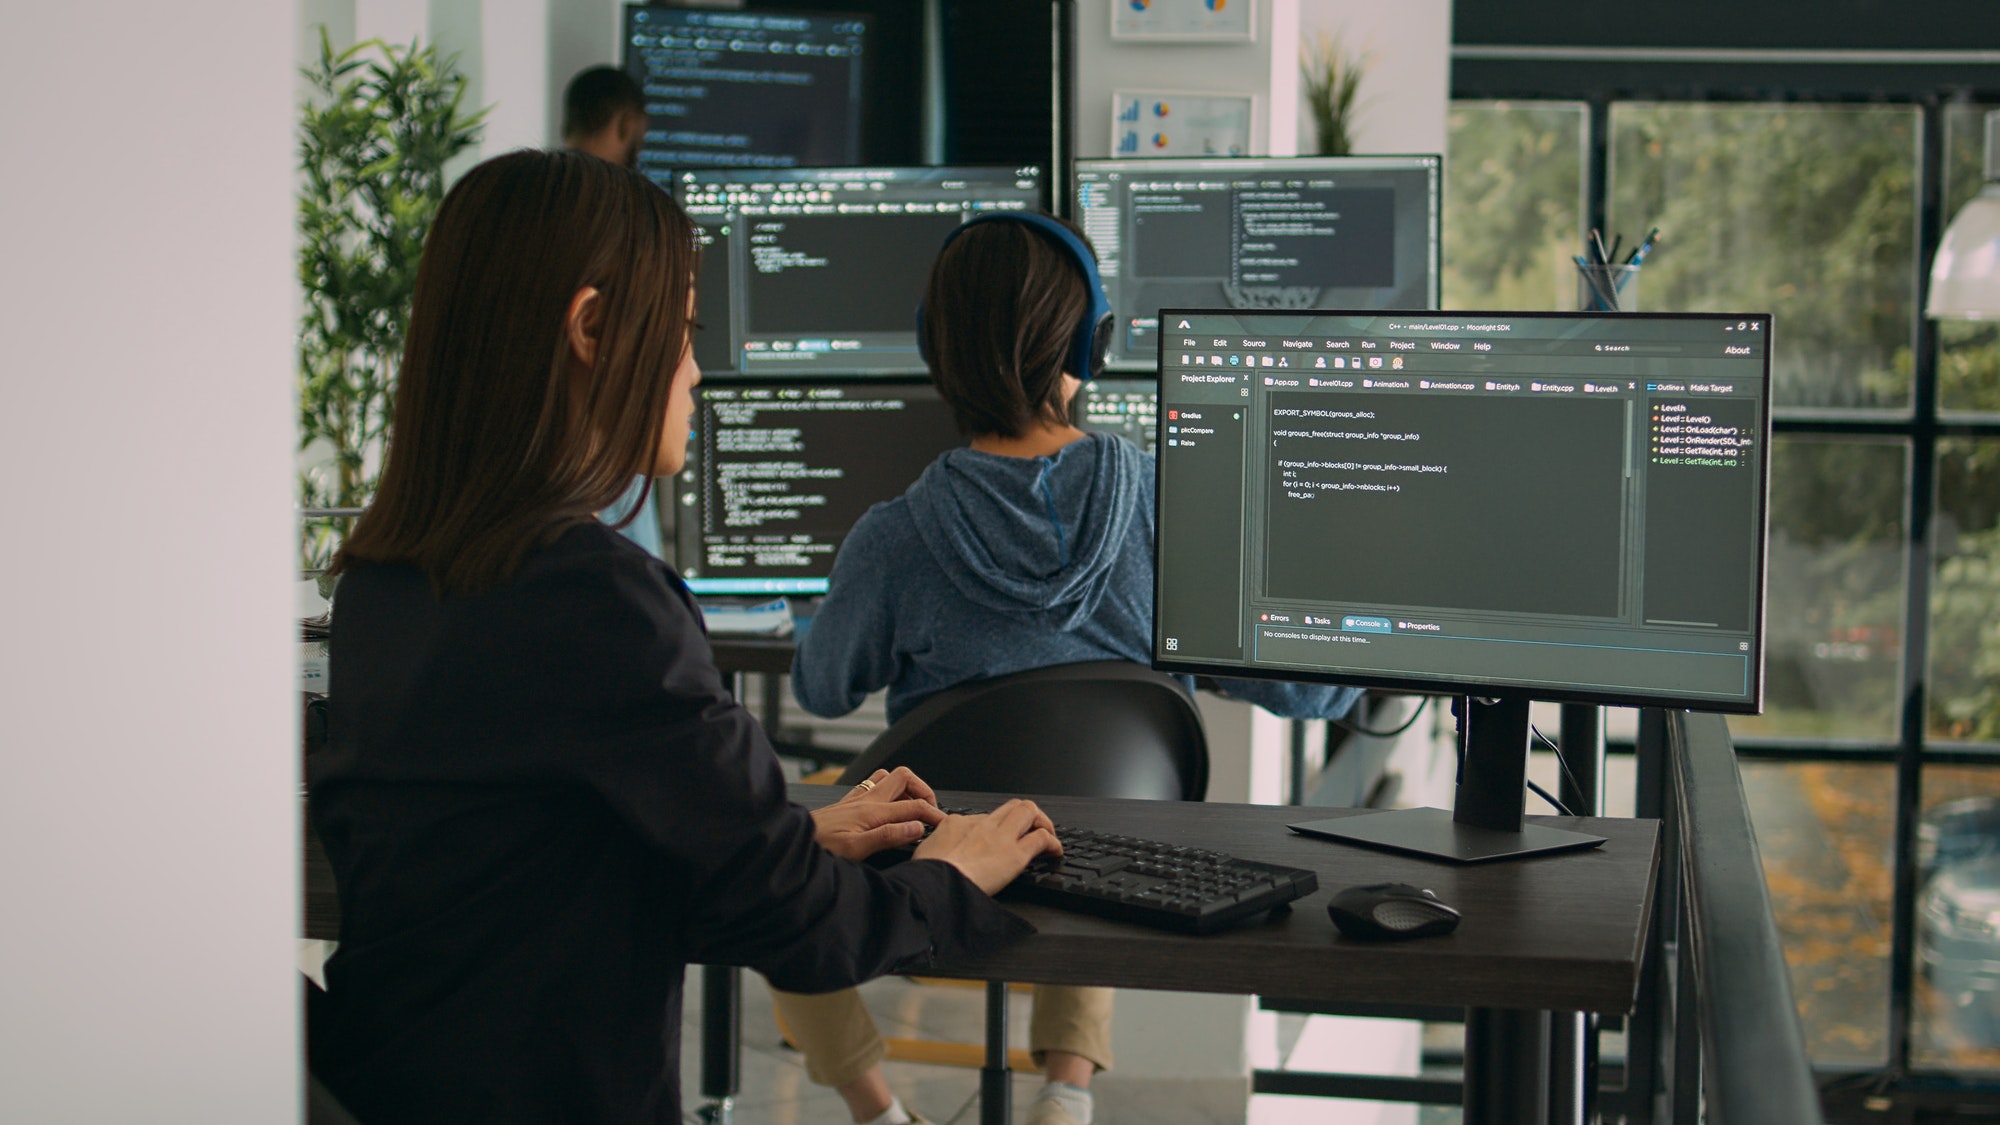 Database developer using computer to write code on terminal window